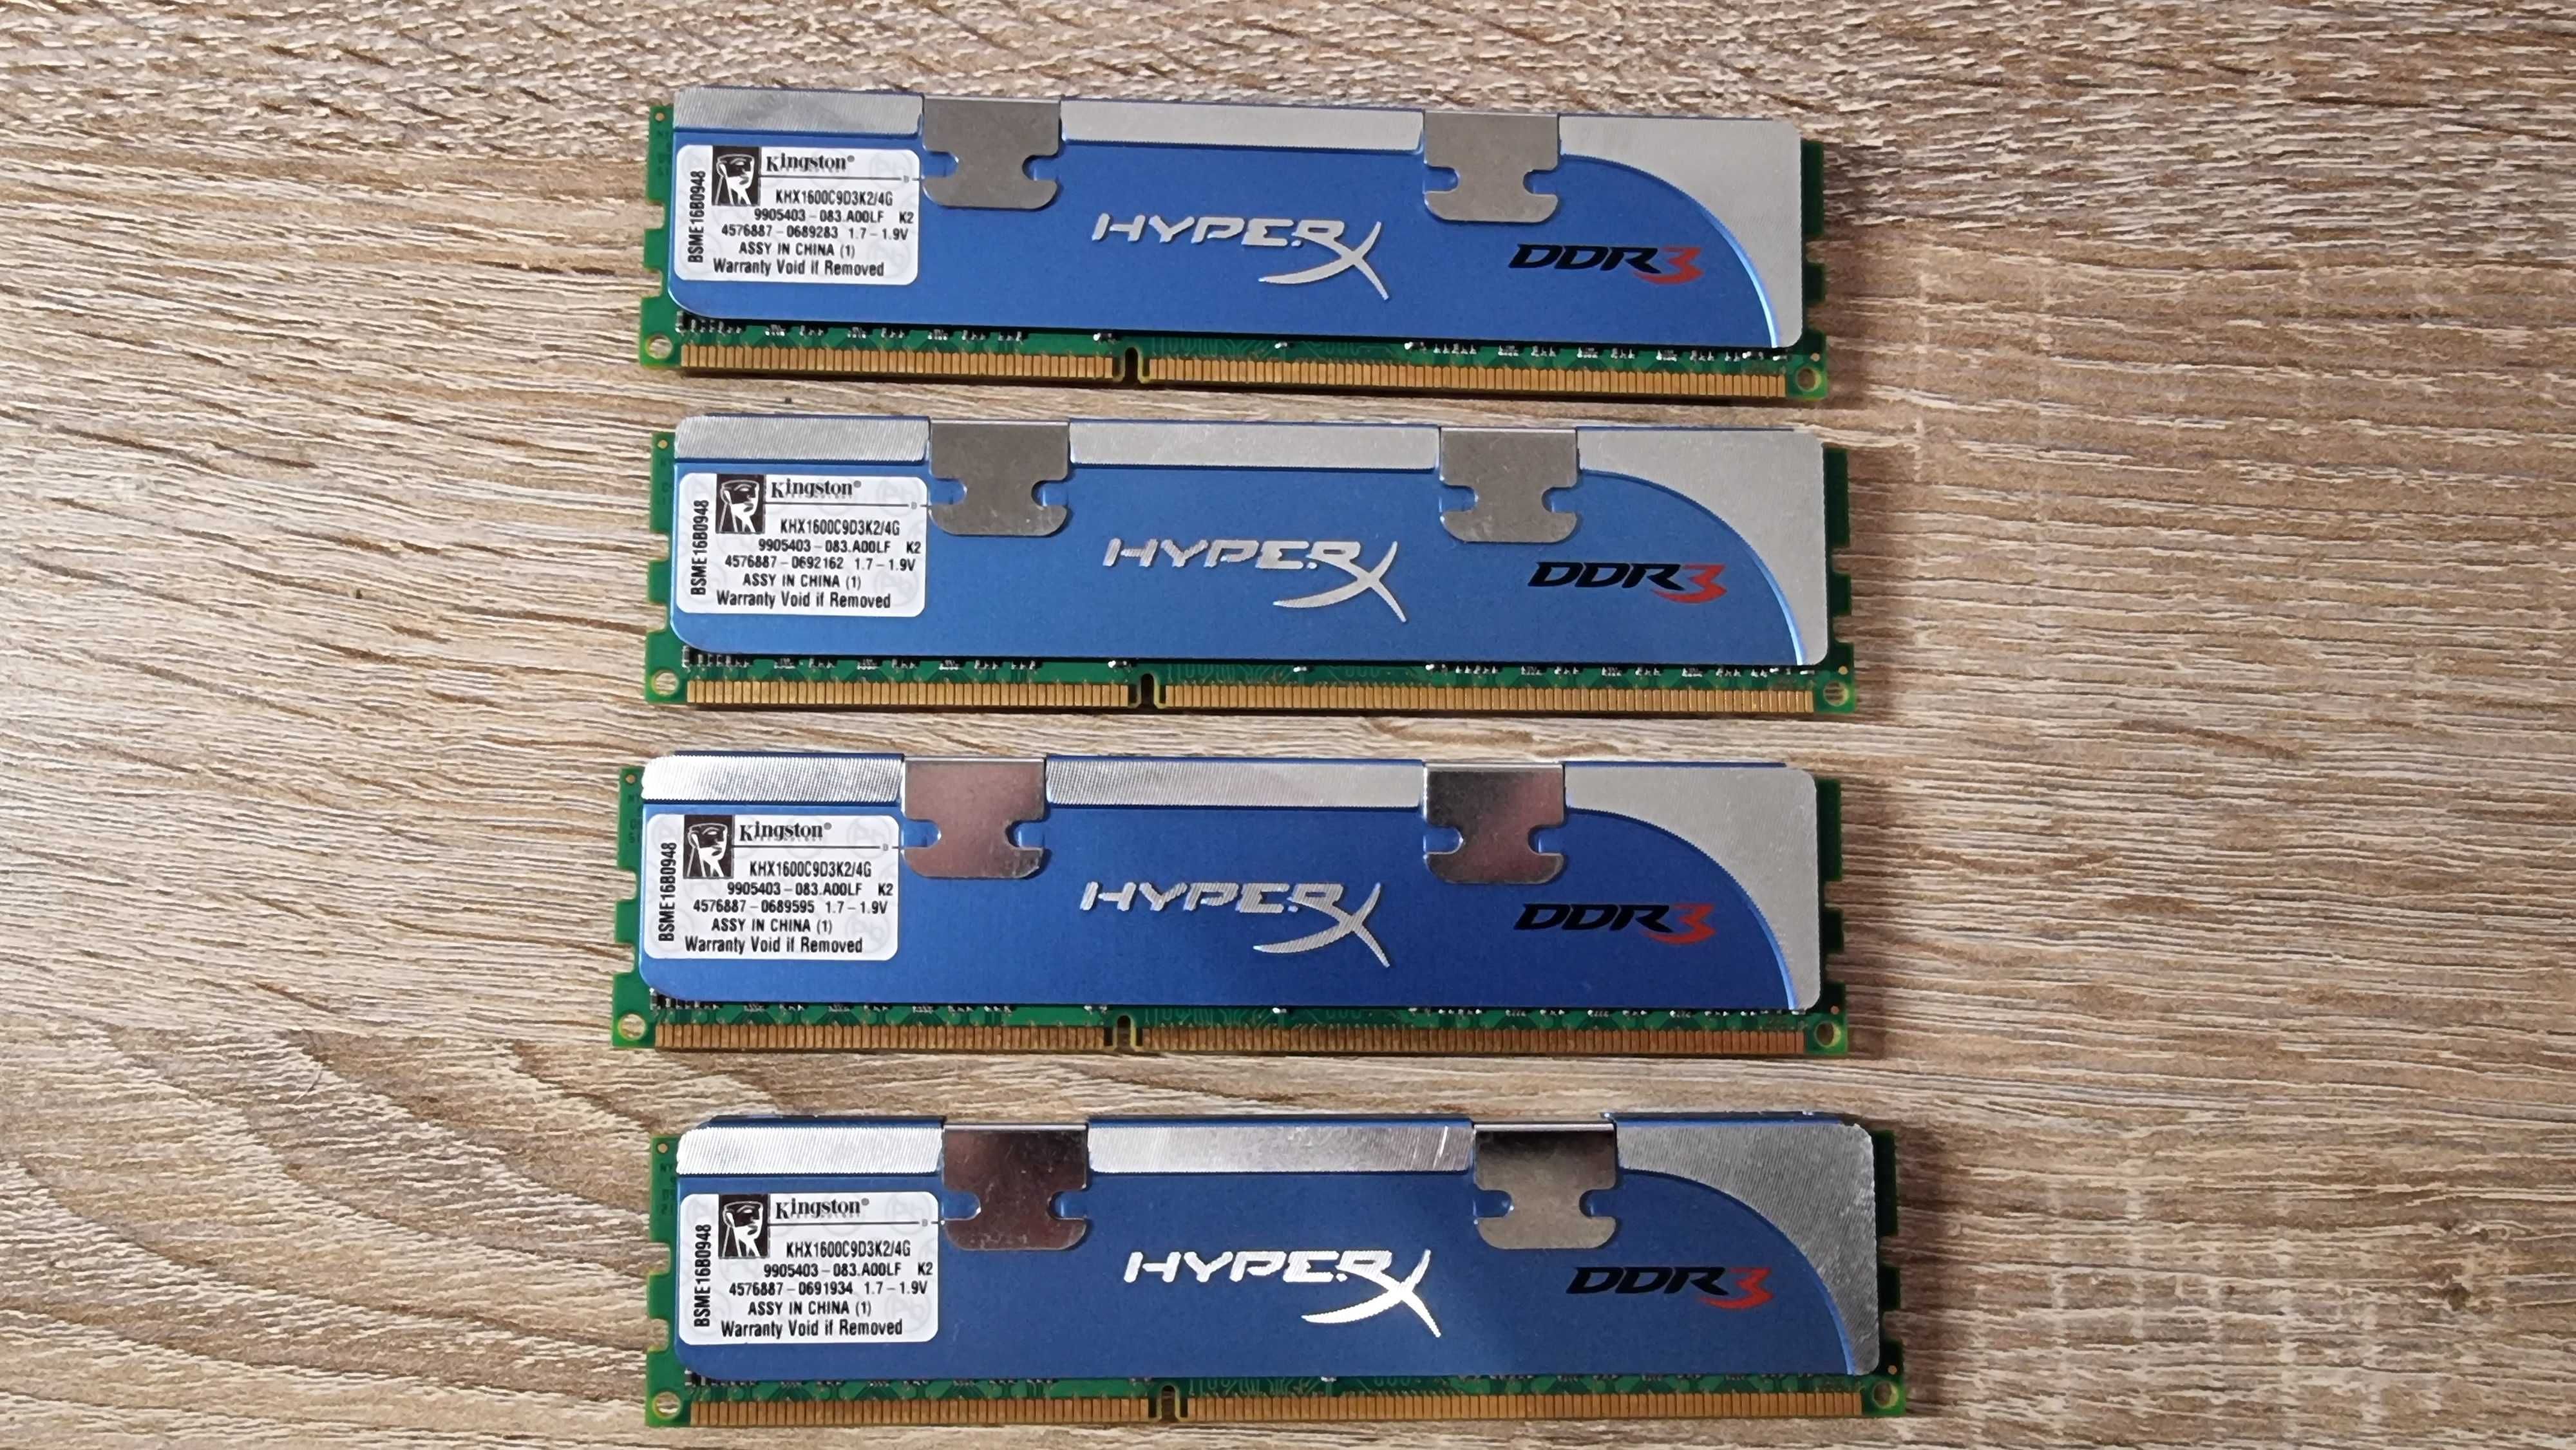 8 GB RAM 4x2GB Kingston khx1600c9d3k2/4g DDR3